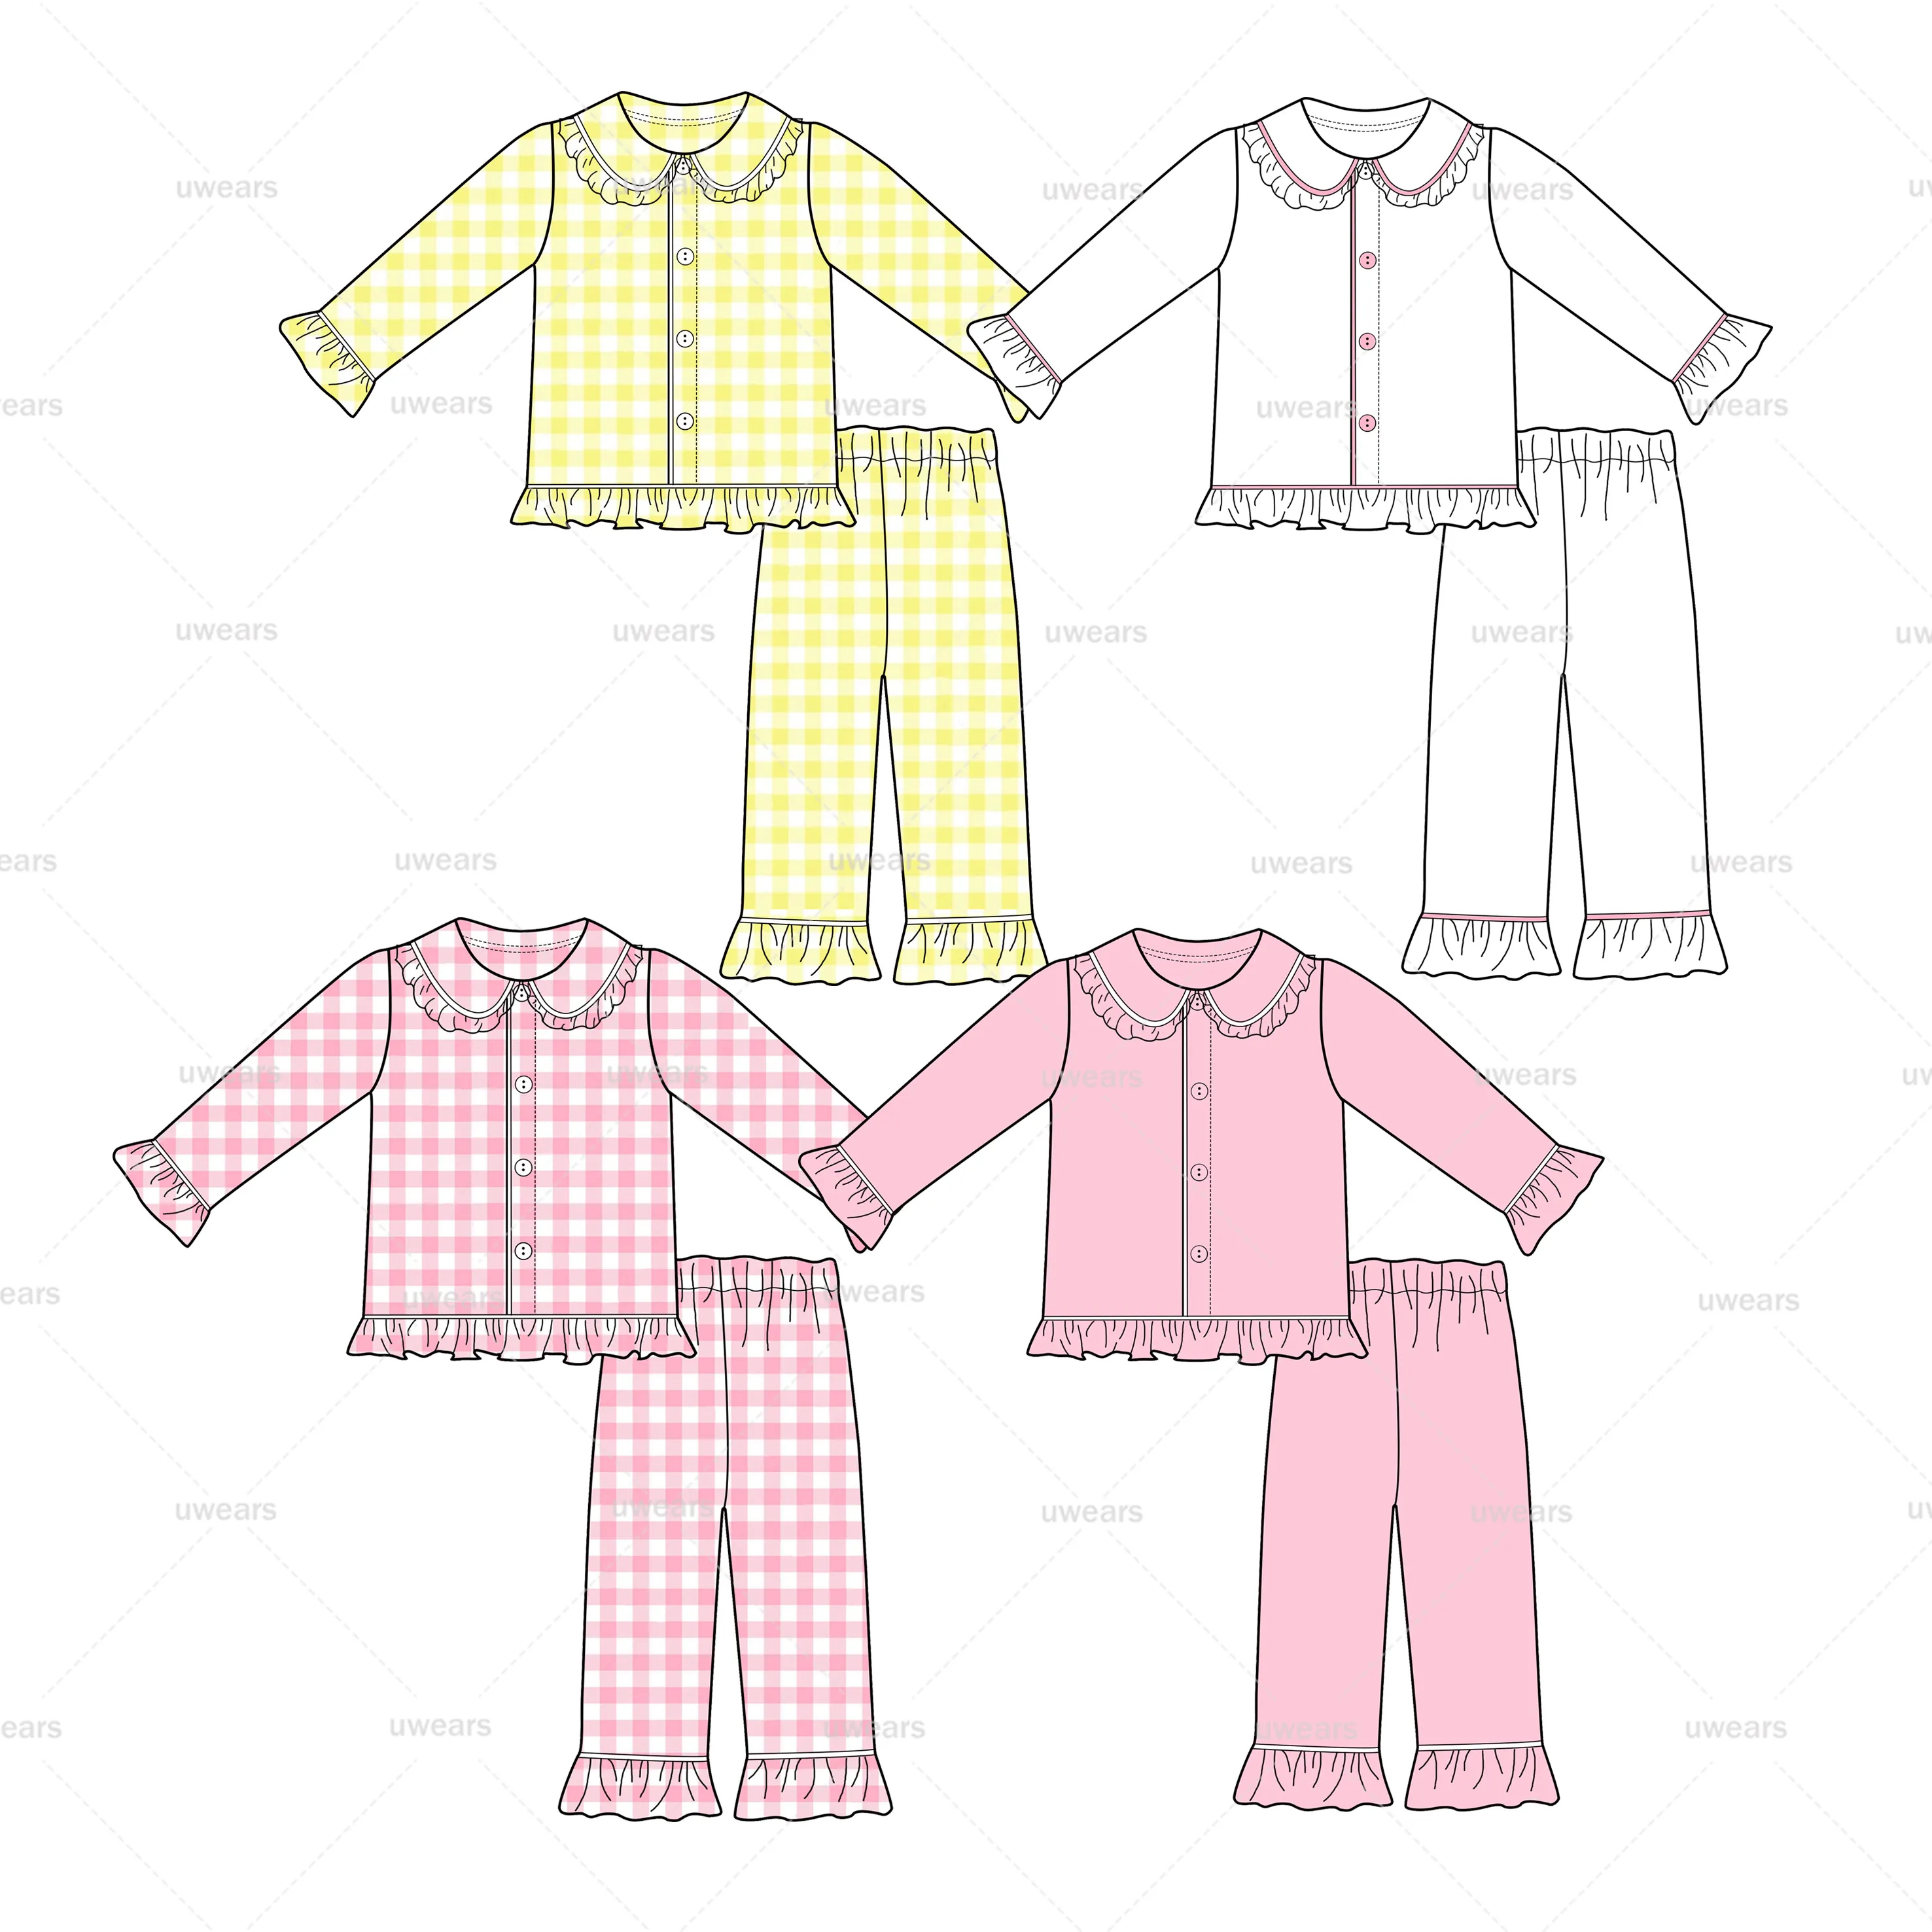 Sweet girls ruffle pjs long sleeve gingham cotton knit spring baby girl pyjamas